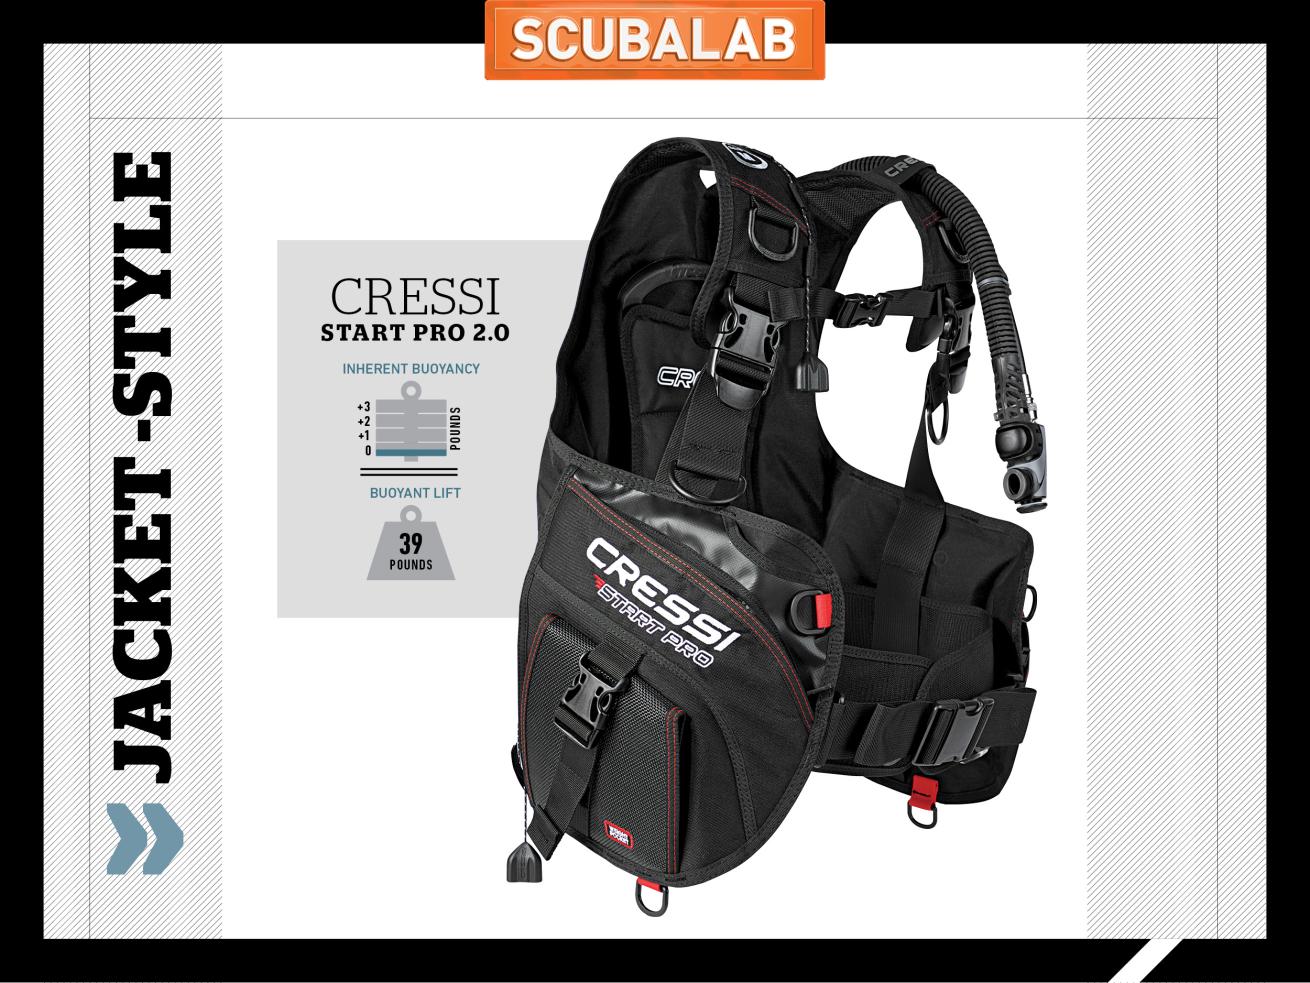 Cressi Start Pro 2.0 scuba diving BC ScubaLab review